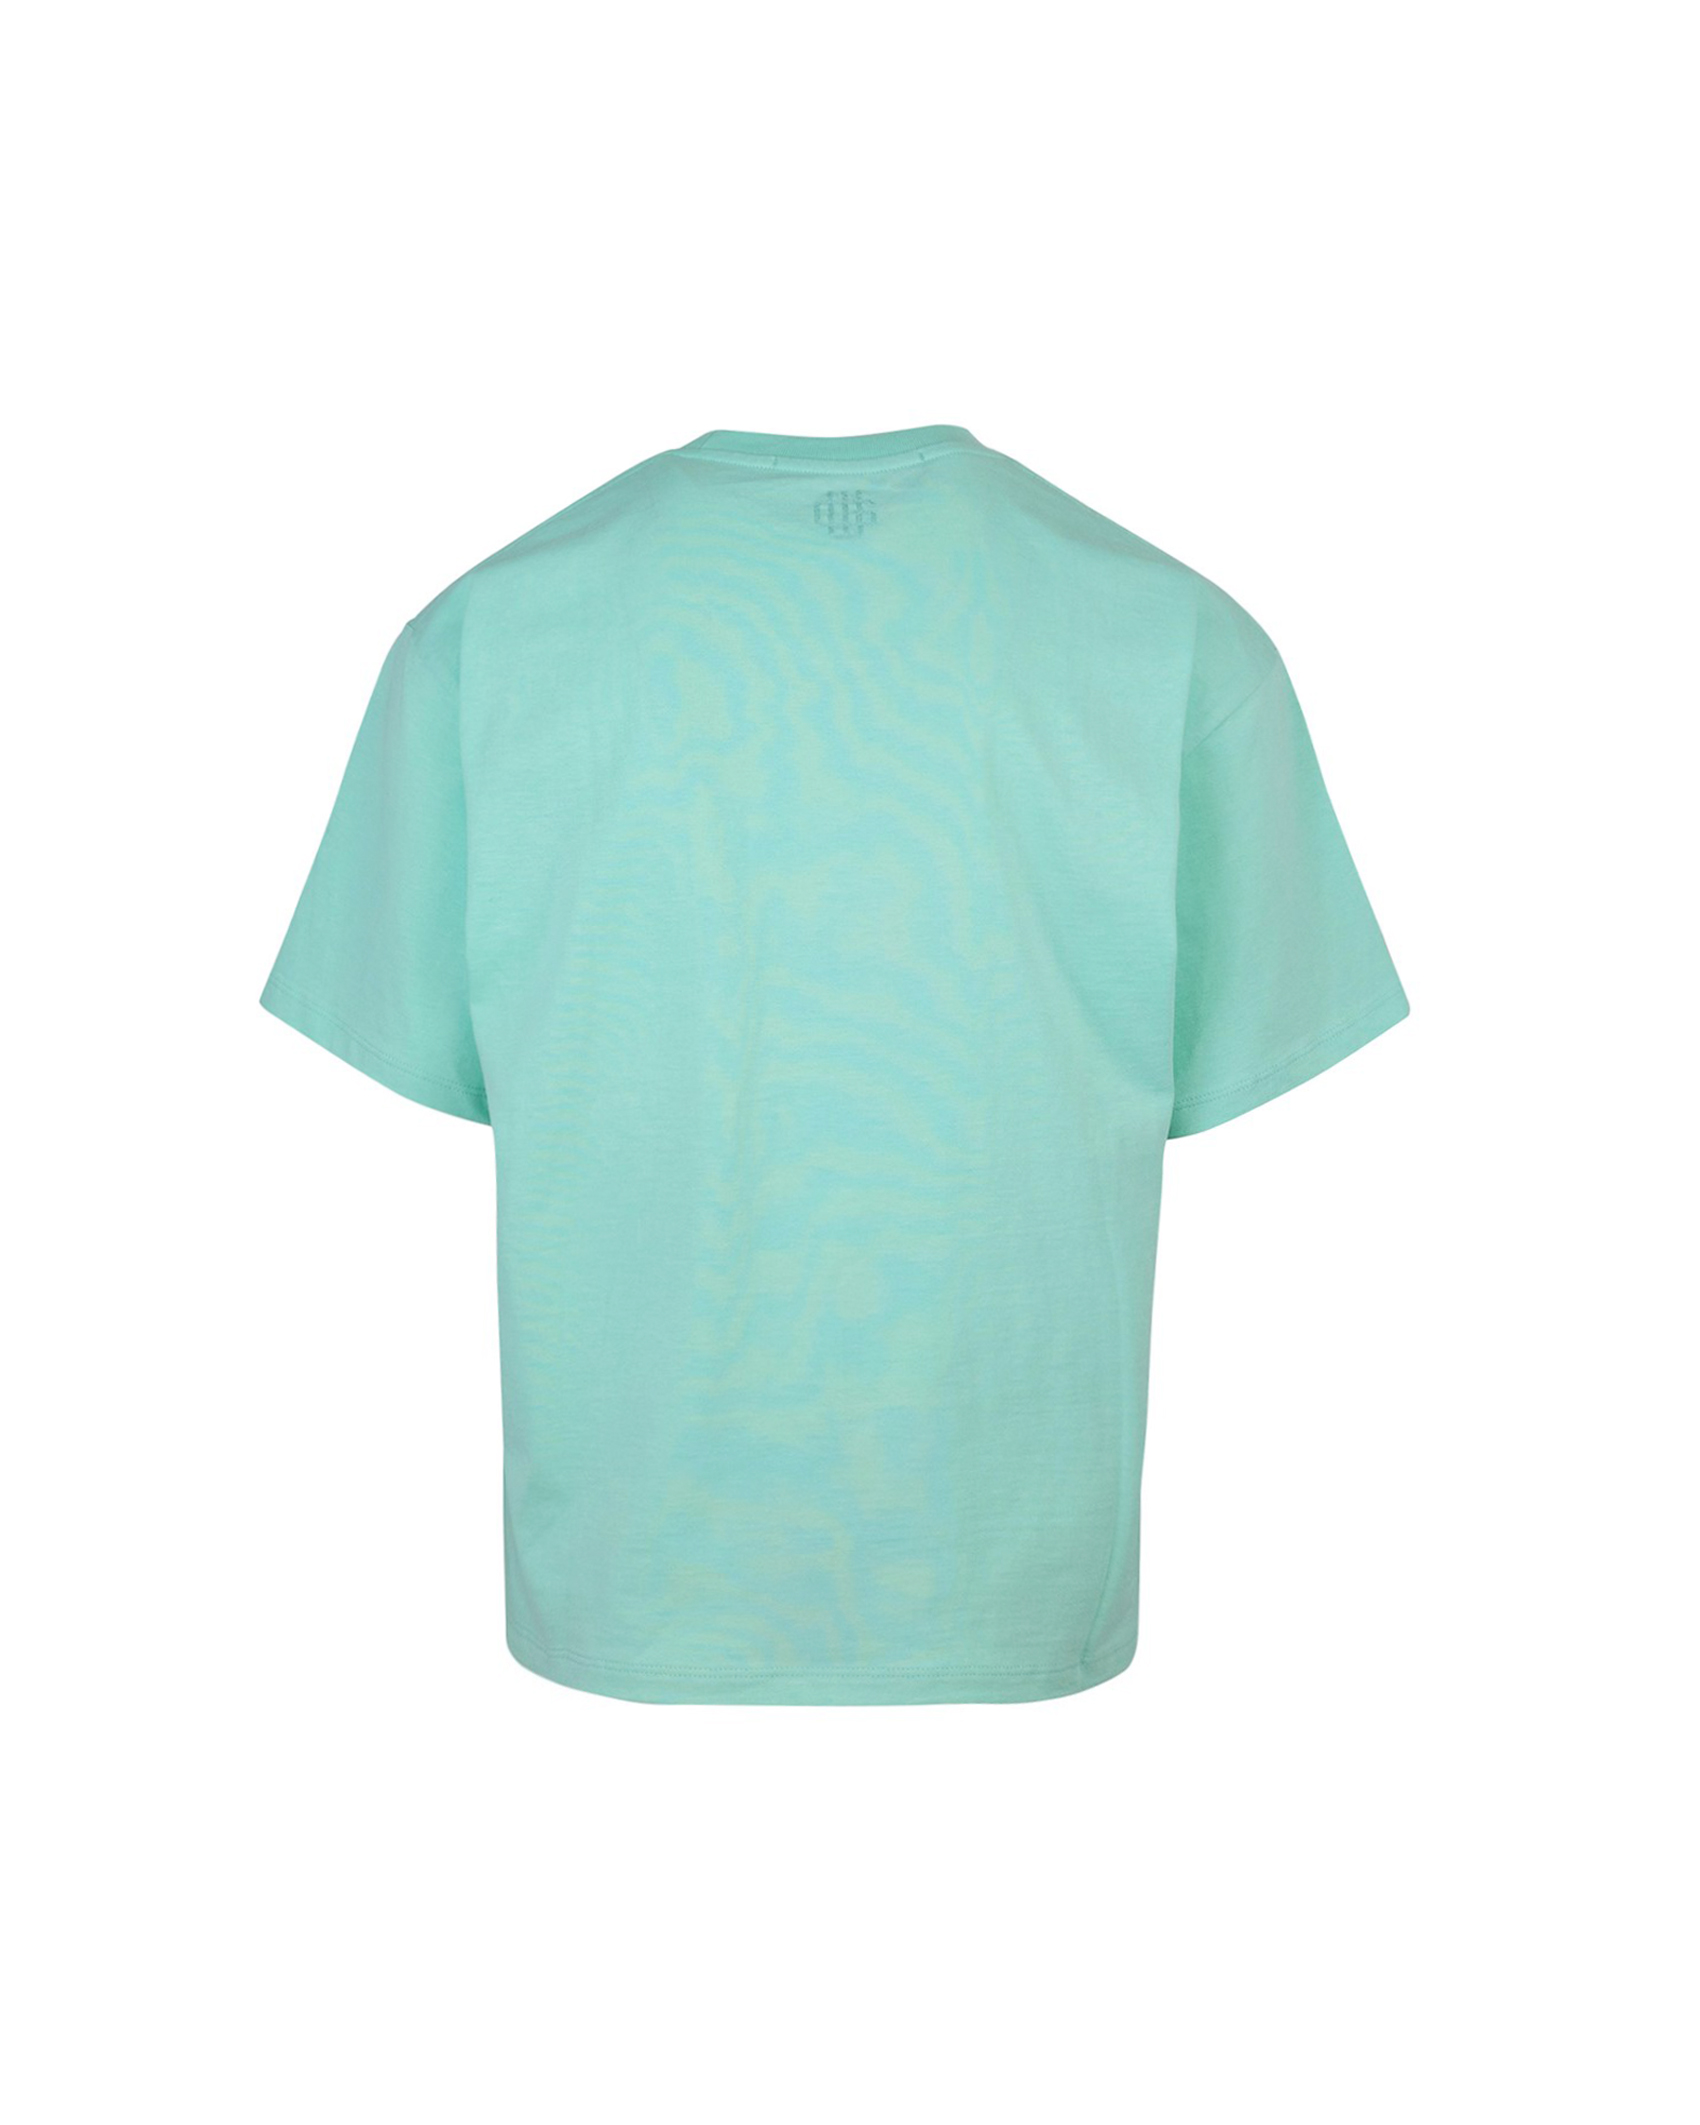 Shop Garment Workshop Basic T-shirt With Aqua Green Embroidery In Gw029viridian Green